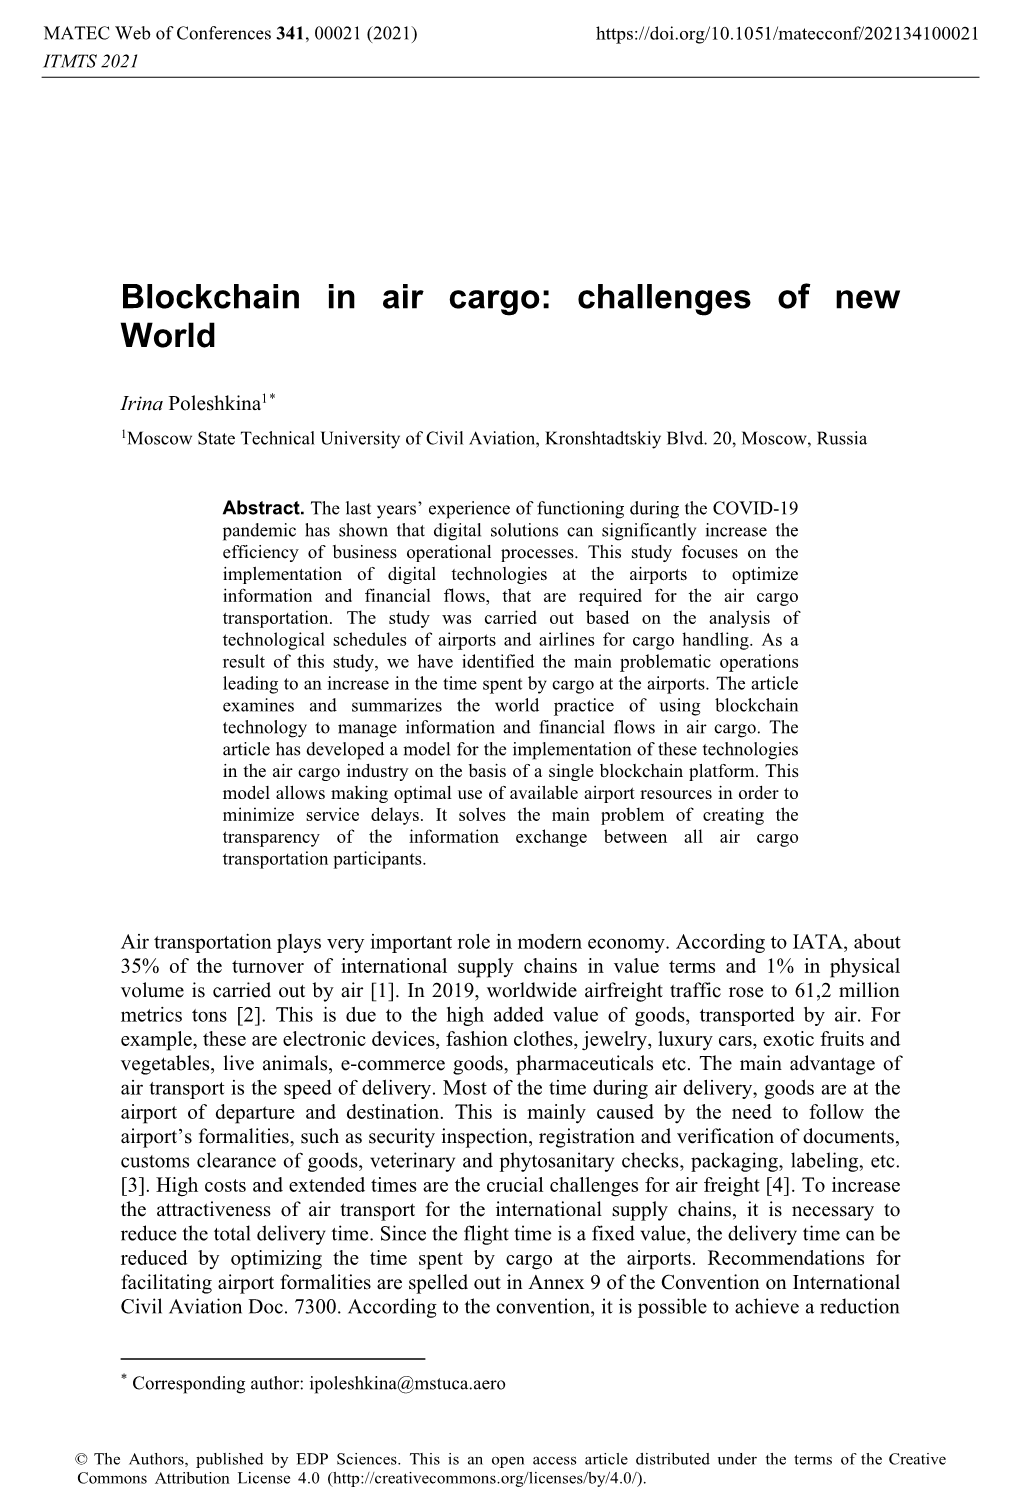 Blockchain in Air Cargo: Challenges of New World